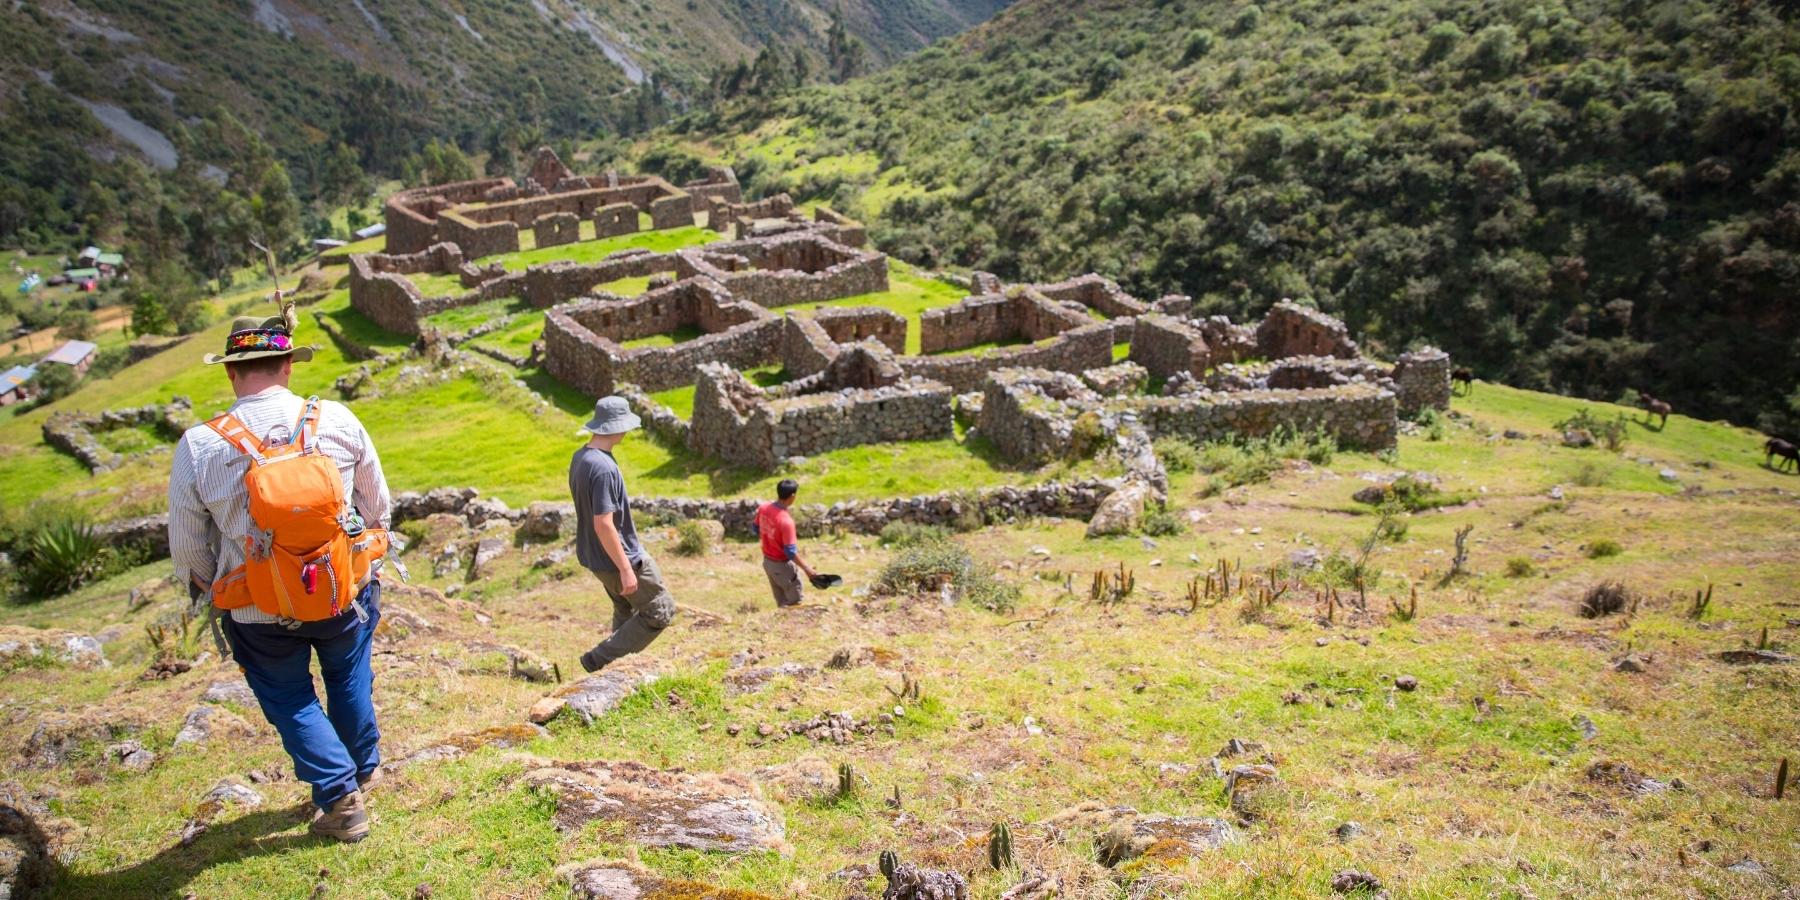 Ancascocha Trail to Machu Picchu 4 Days